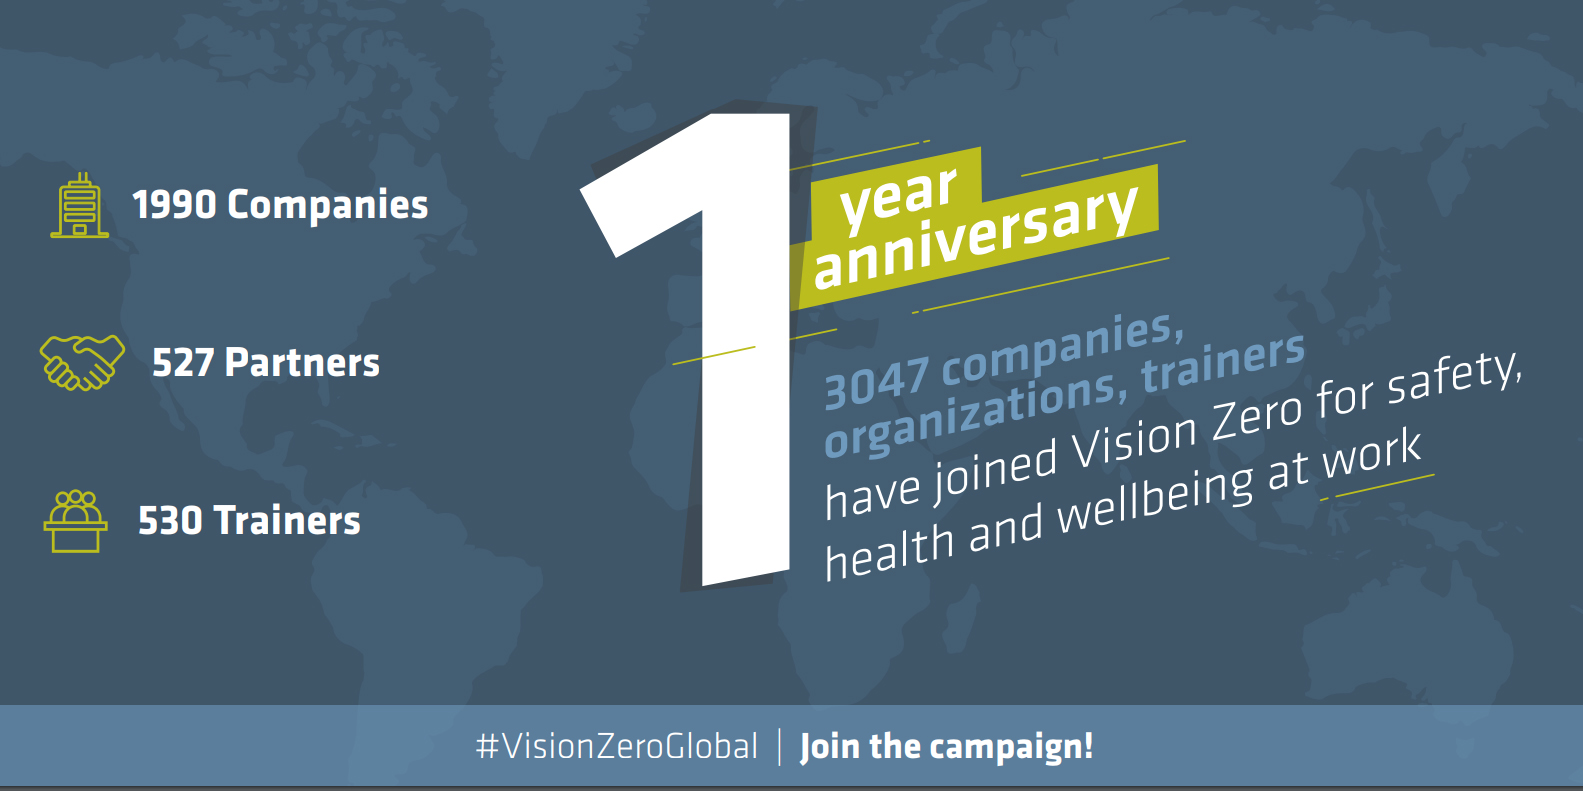 Vision Zero reaches 3000 supporters